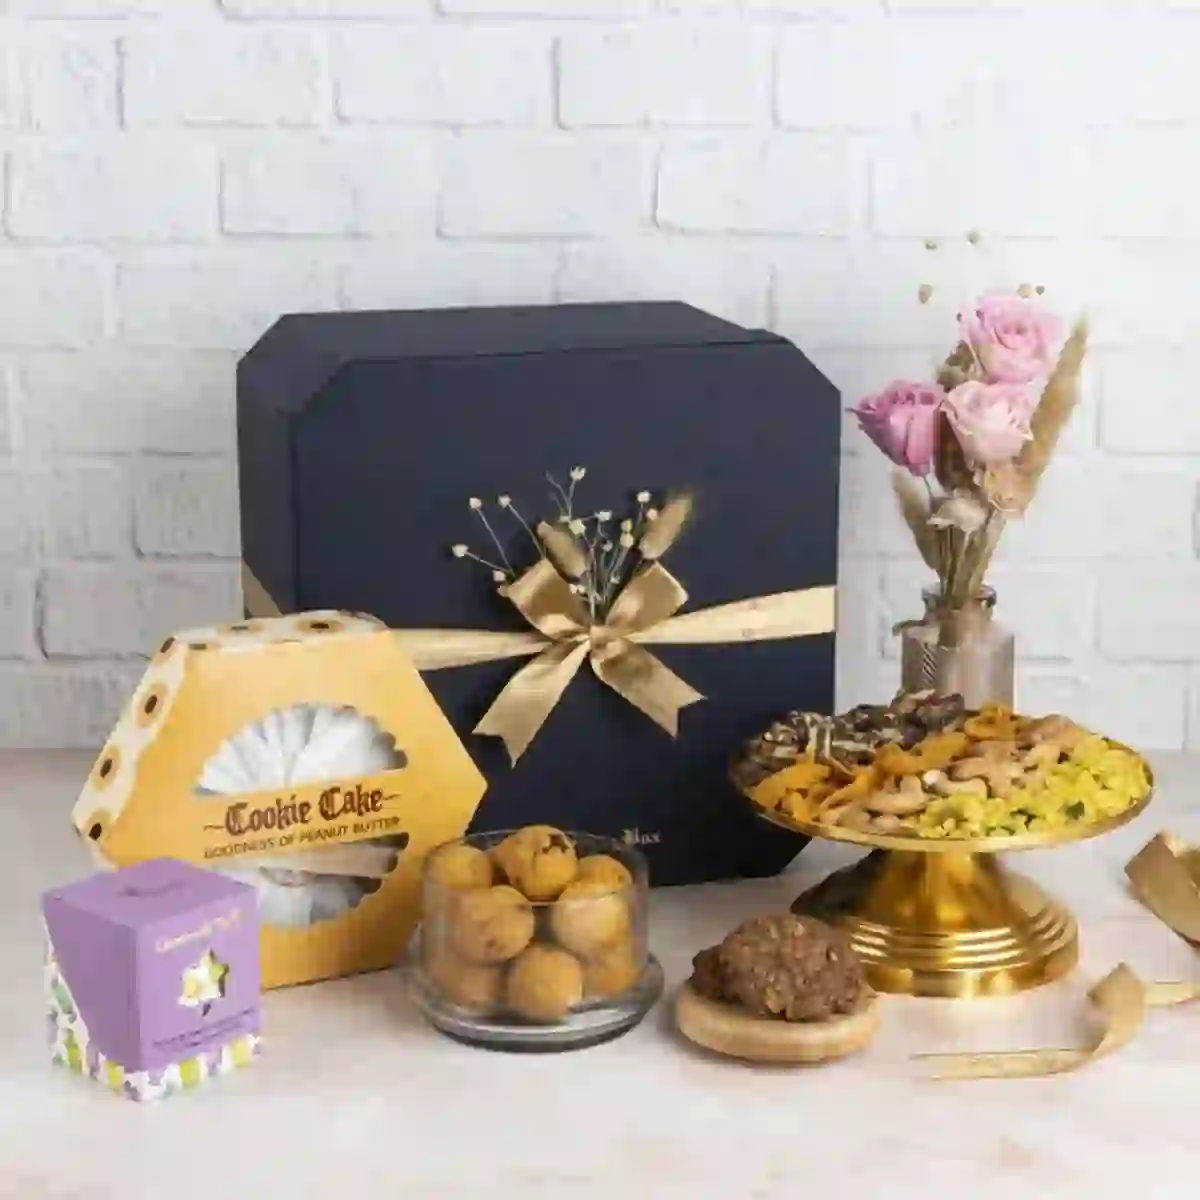 Edgars-Bakery-Christmas-Bundt-Cake-Gift-Box.jpg?ixlib=rails-3.0.2